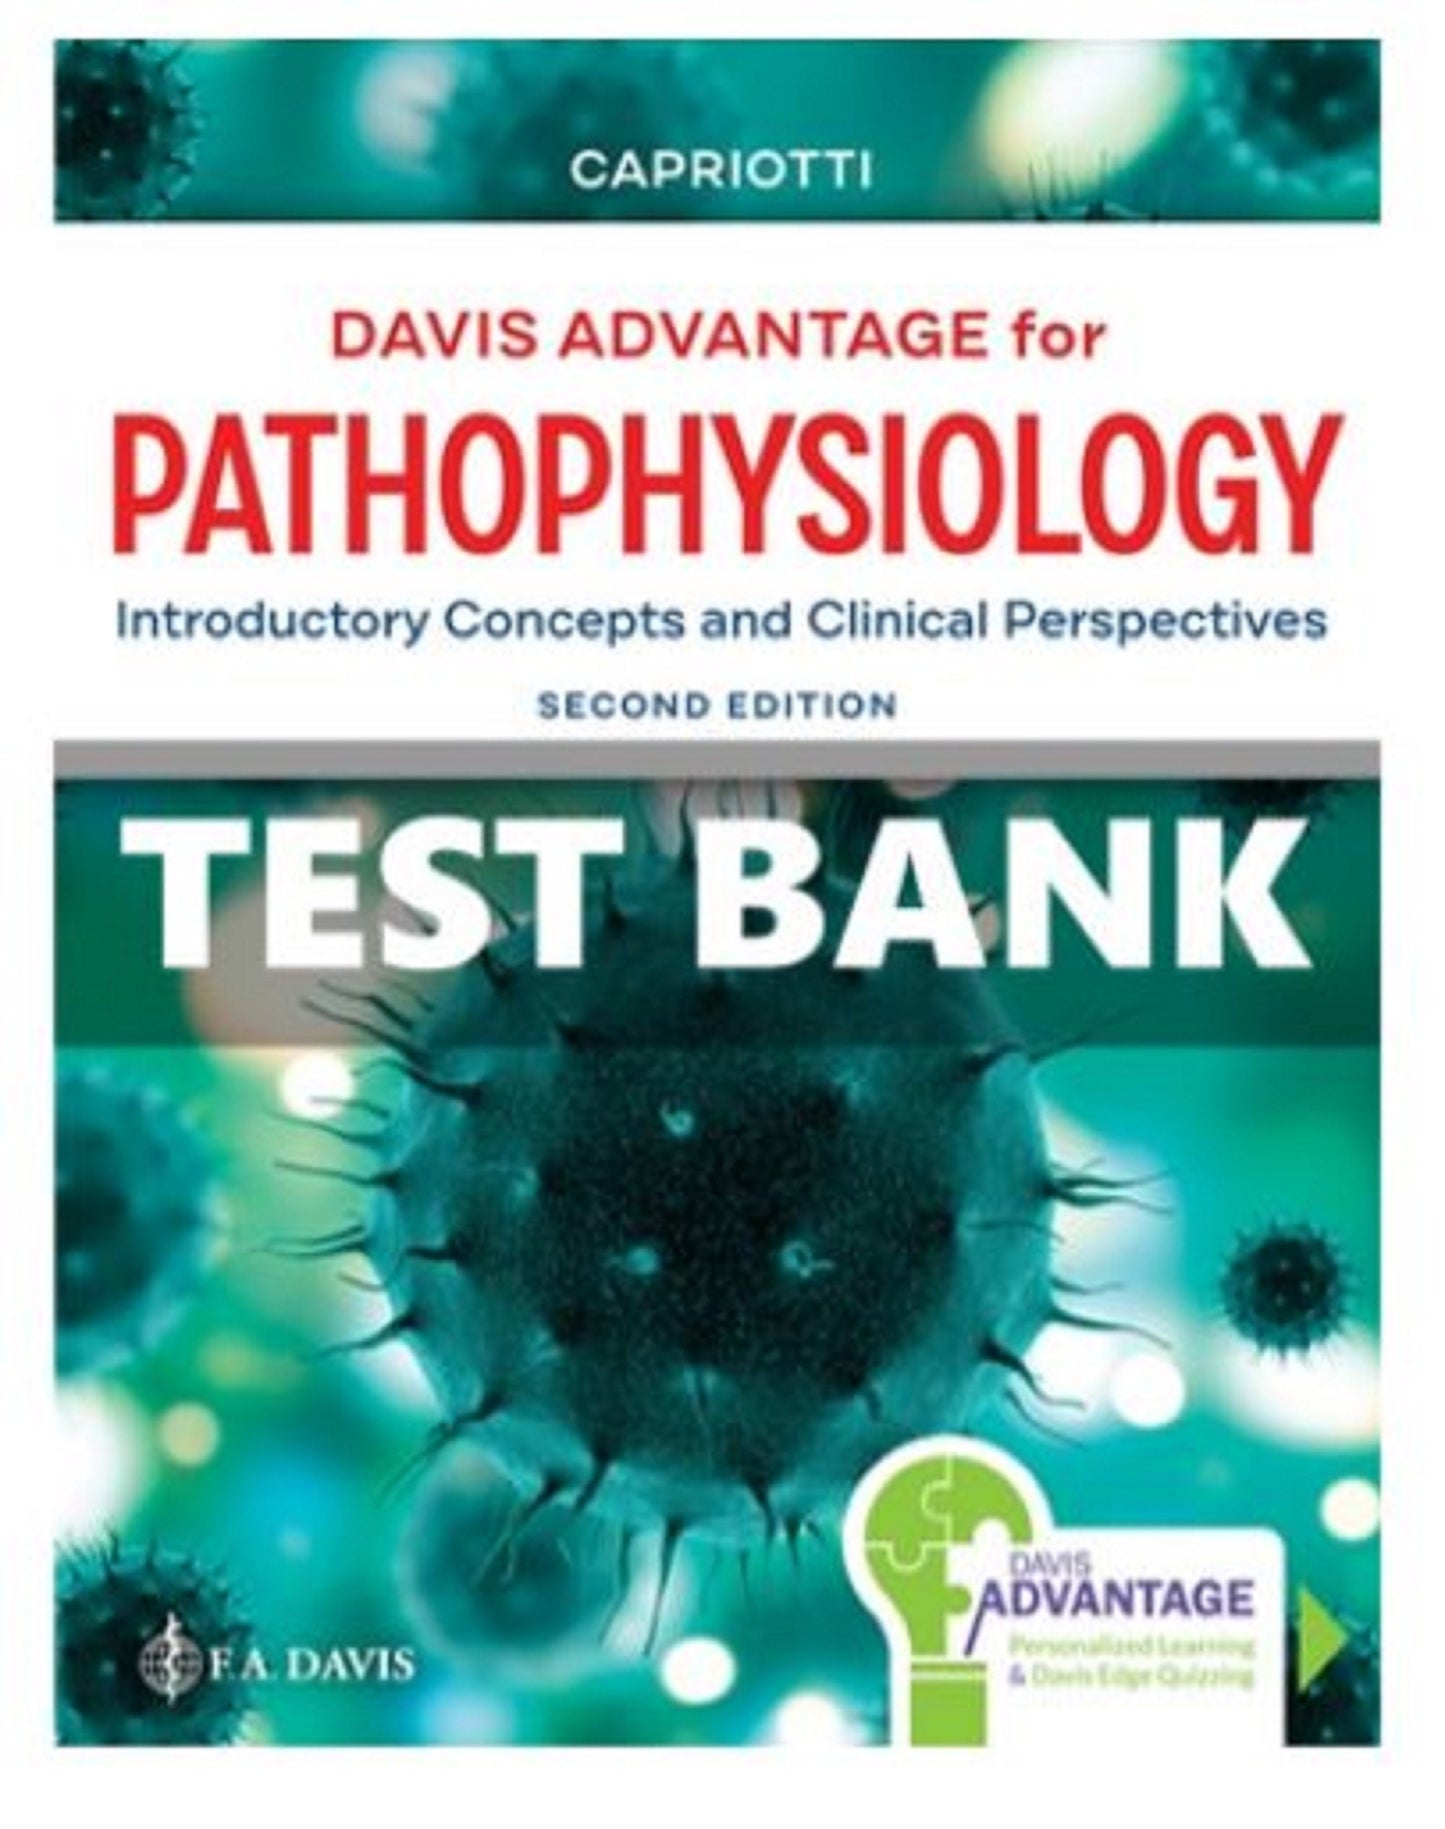 TEST BANK Davis Advantage for Pathophysiology 2nd Edition Introductory Capriotti